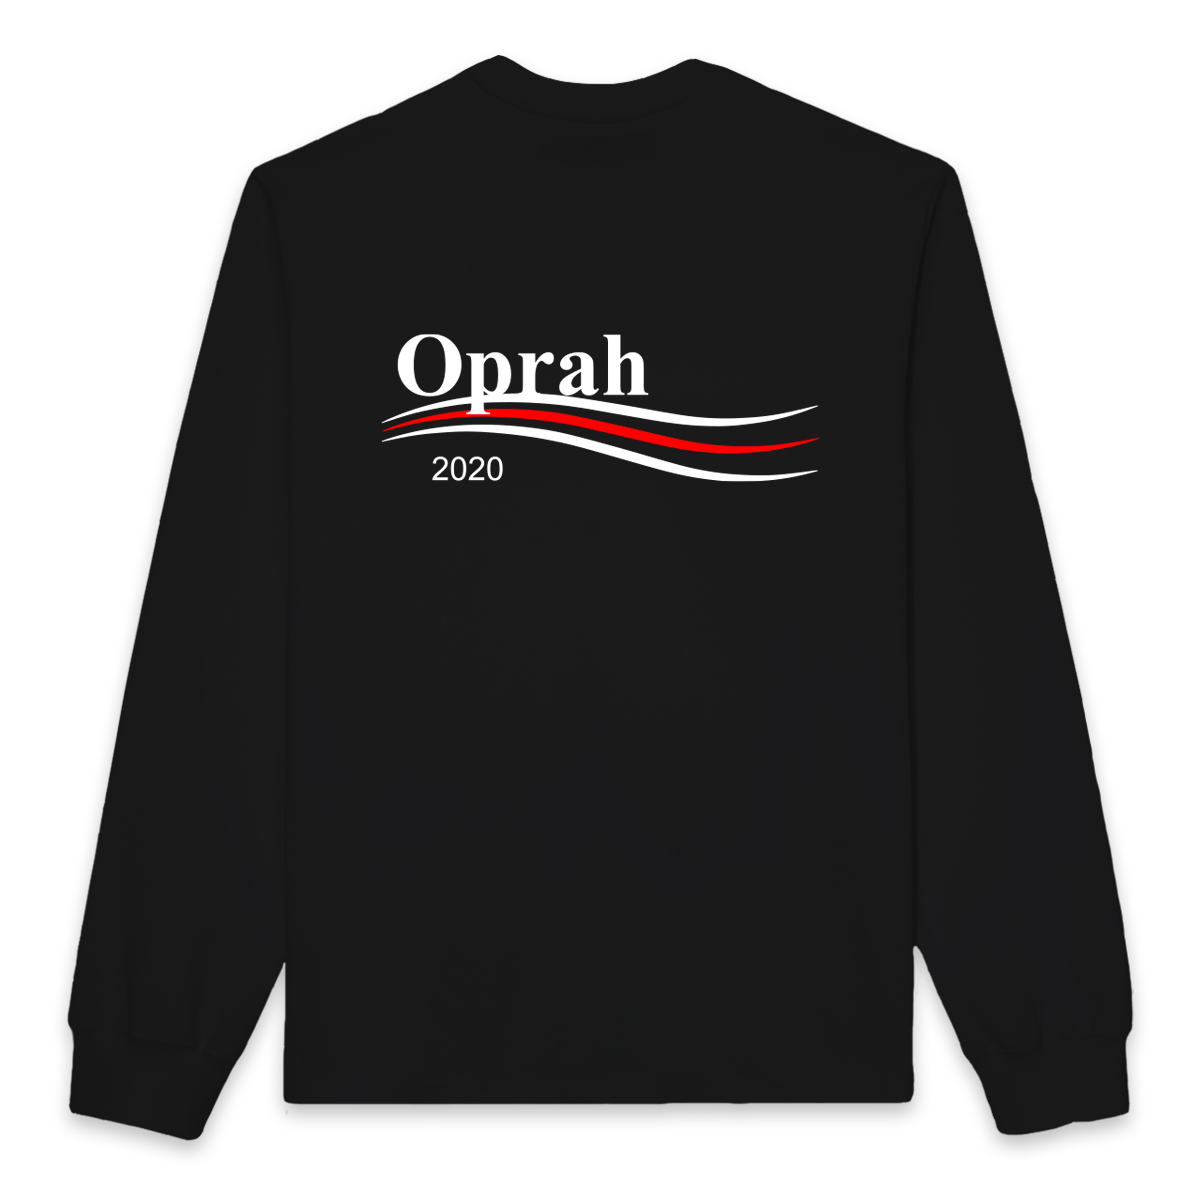 OPRAH 2020 L/S T-SHIRT